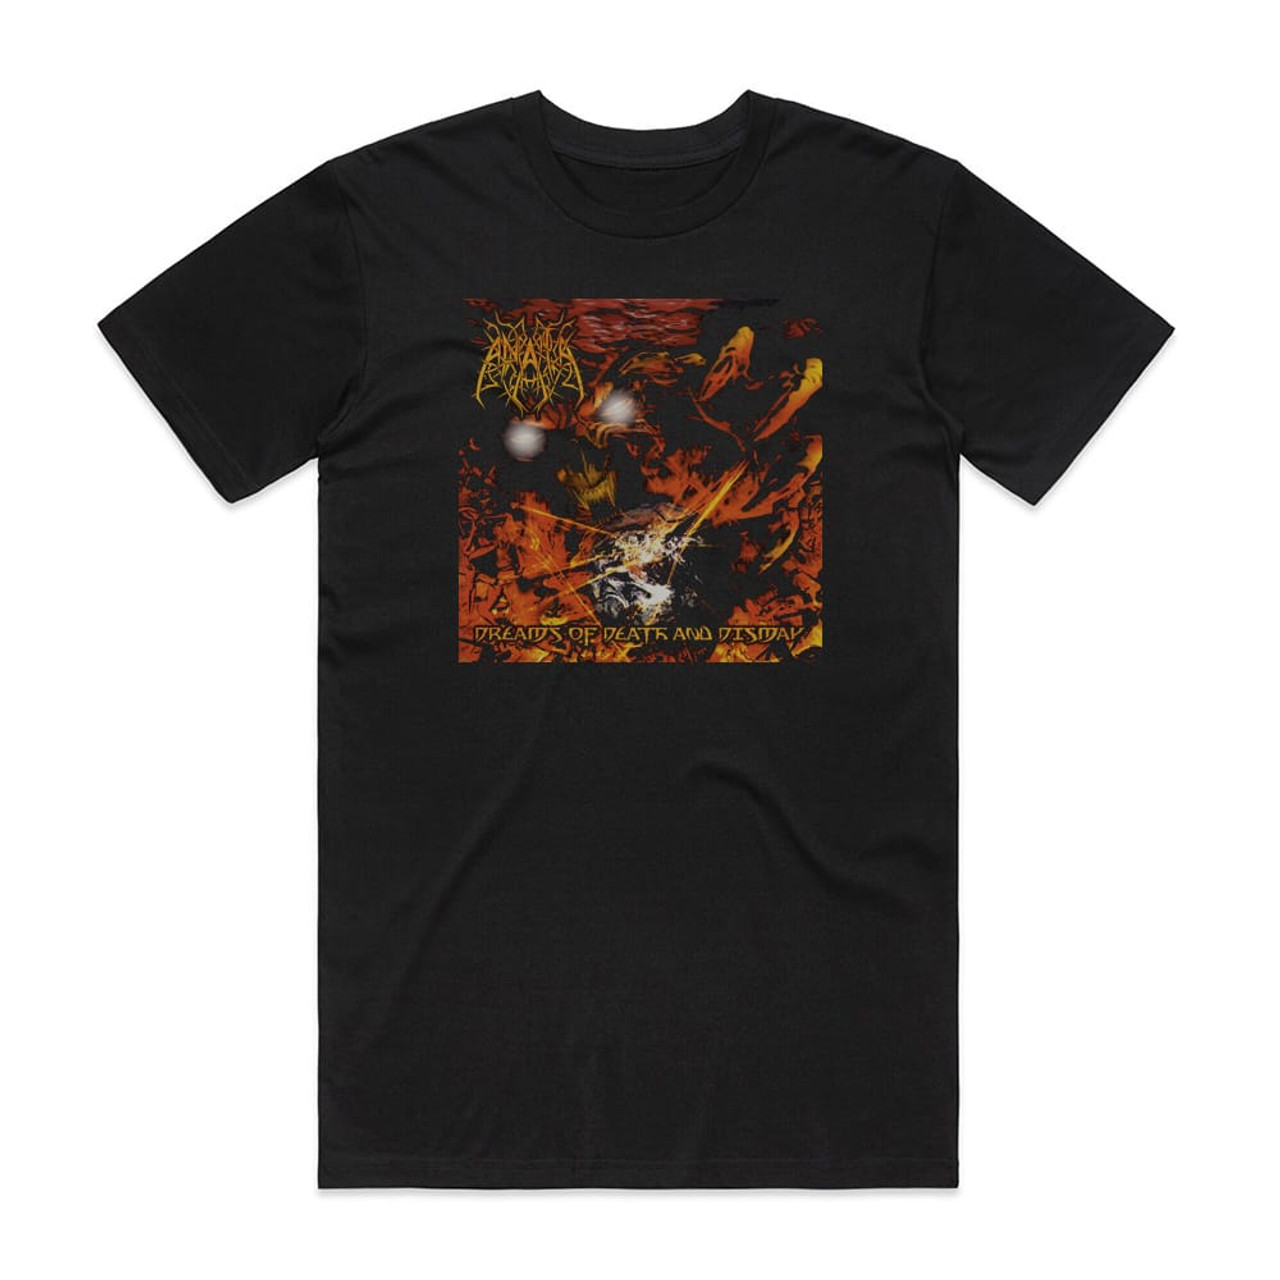 Anata Dreams Of Death And Dismay Album Cover T-Shirt Black